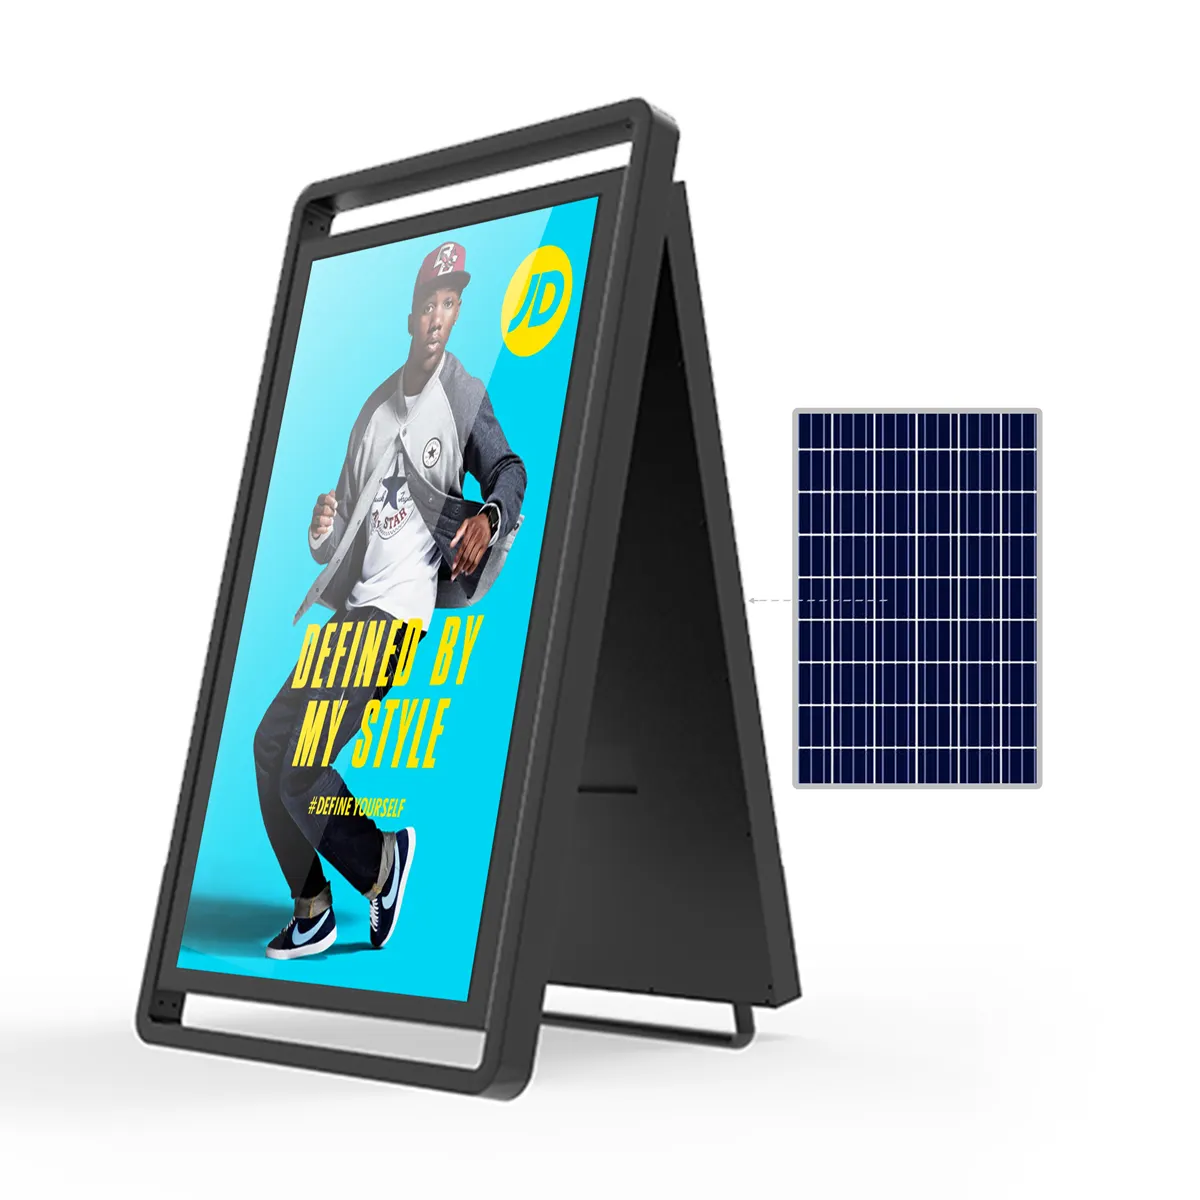 Pantalla de publicidad Digital portátil, alimentada por energía Solar, batería recargable, pantalla LCD para exteriores, resistente al agua